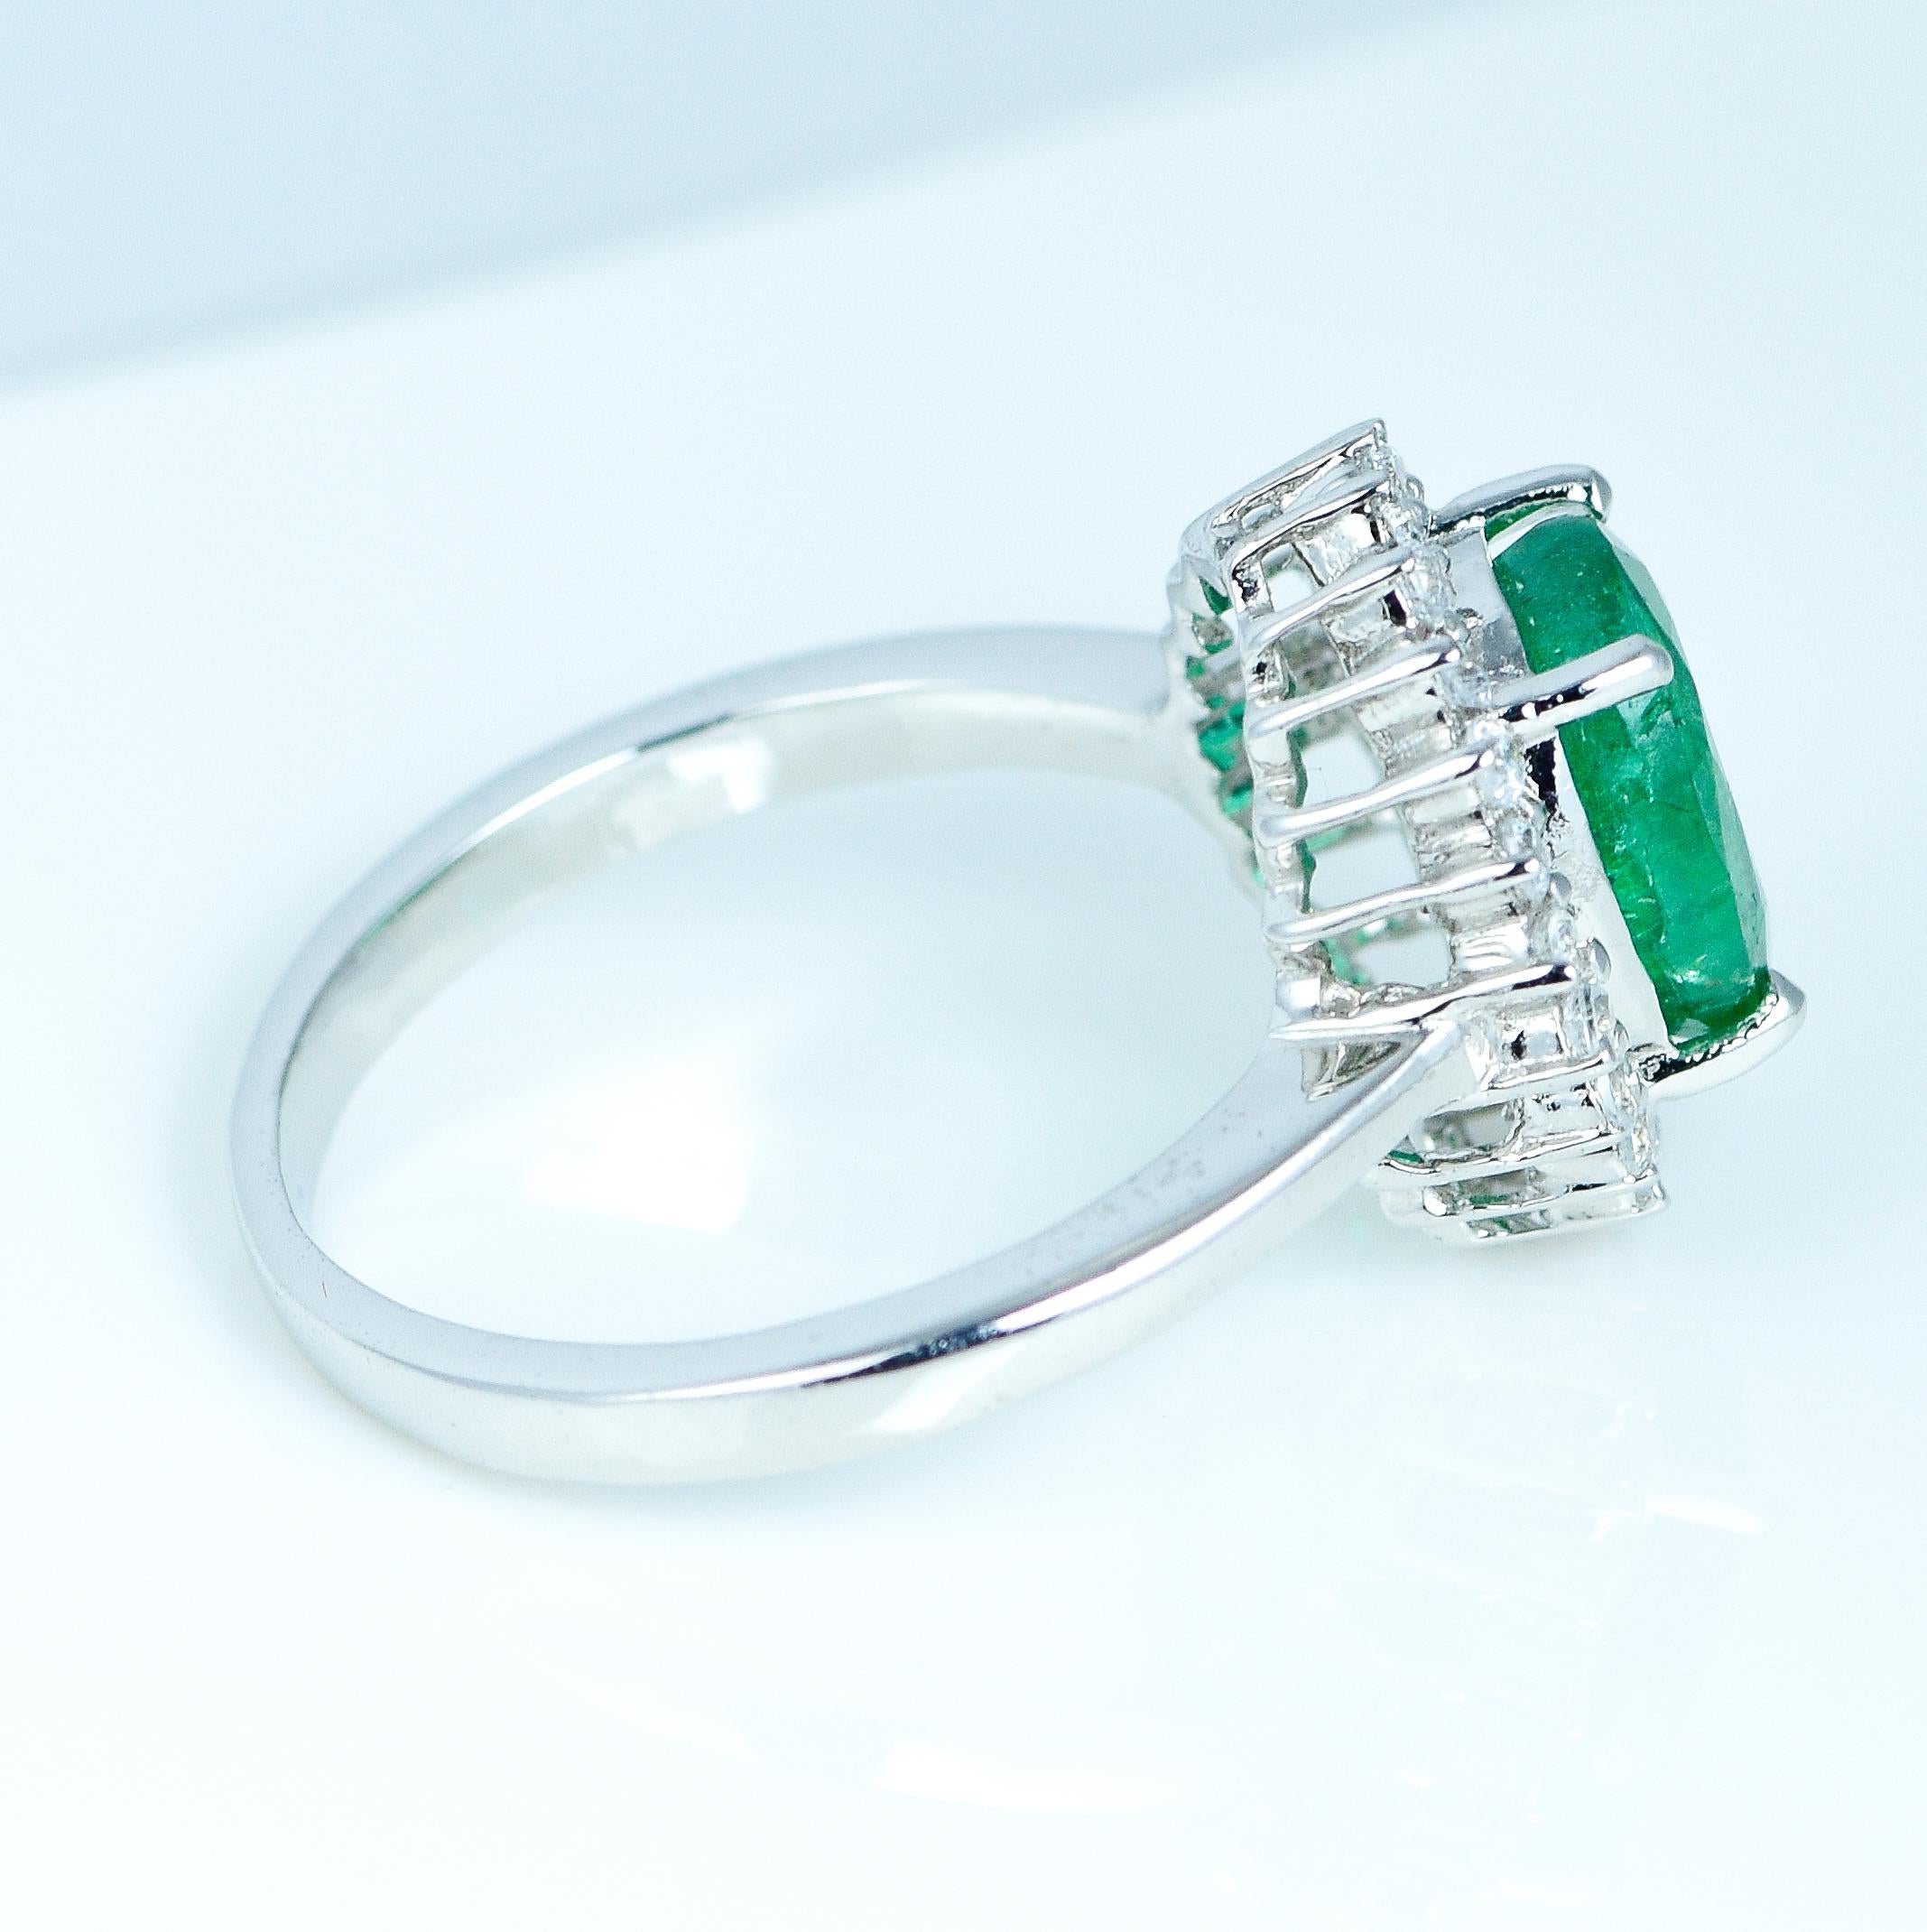 Oval Cut 2.11 Carat Natural Emerald Ring